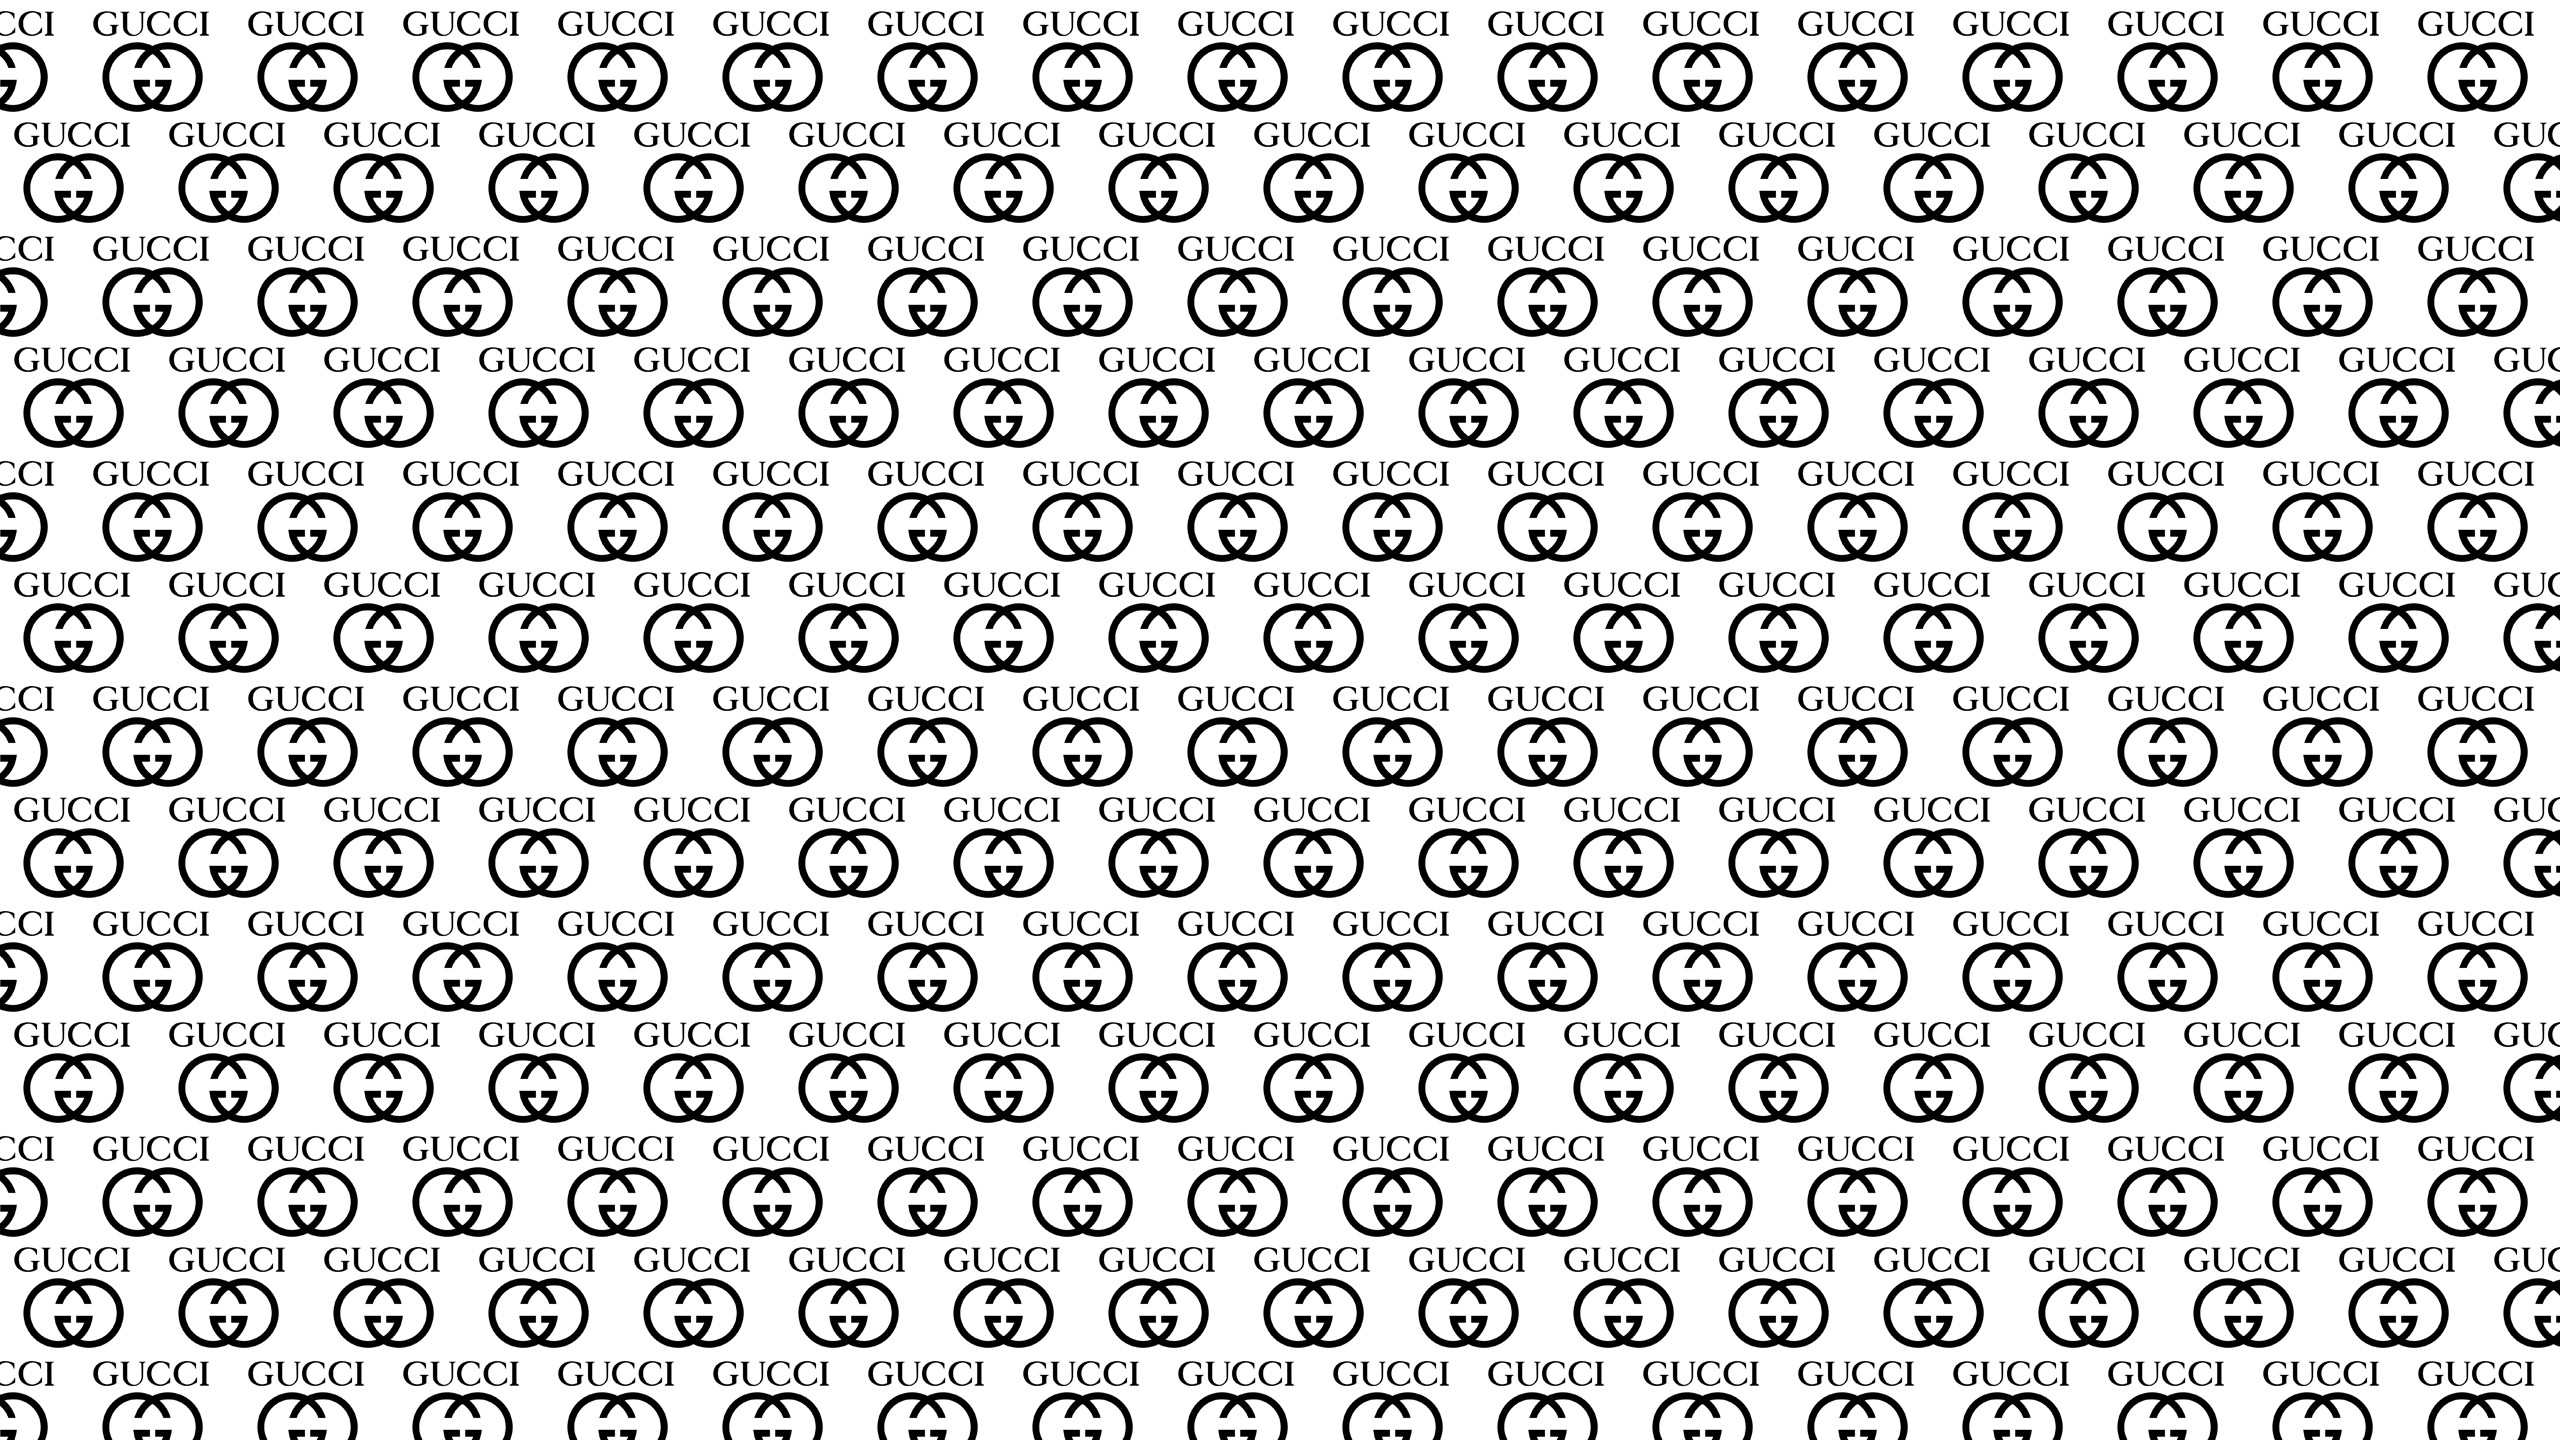 wallpaper gucci pattern